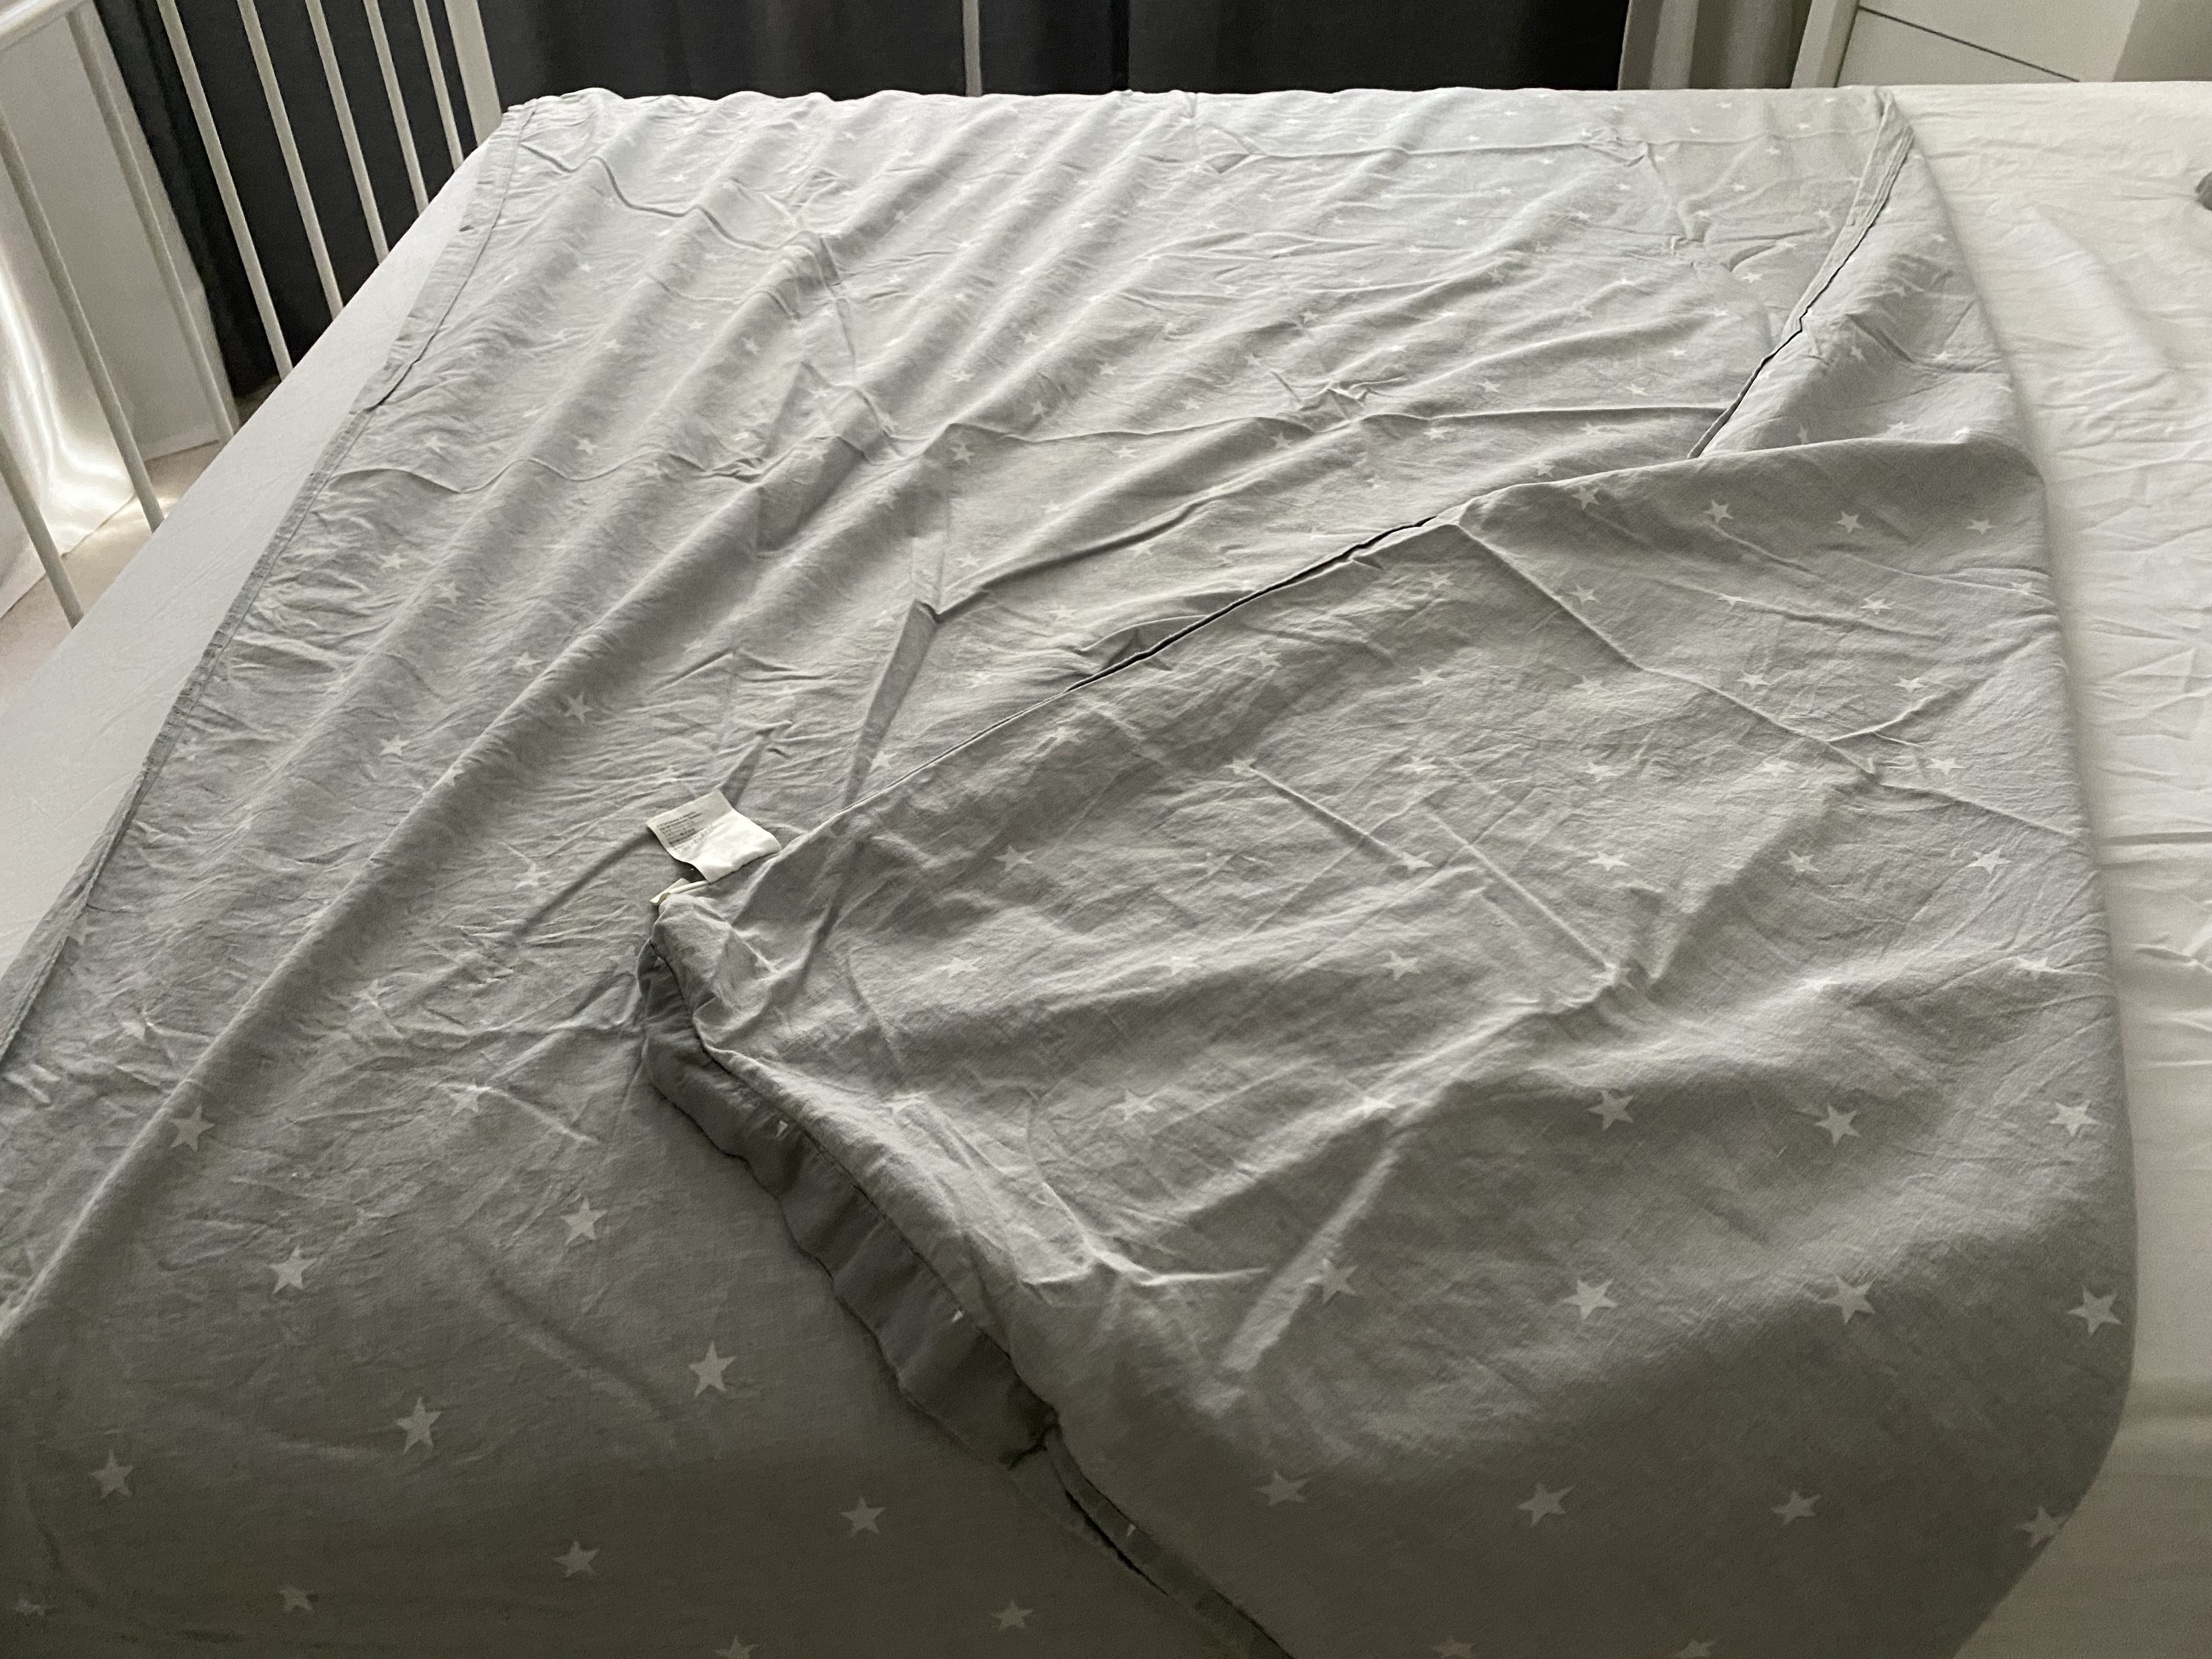 Bettdecke auf links gedreht auf dem Bett liegend. 